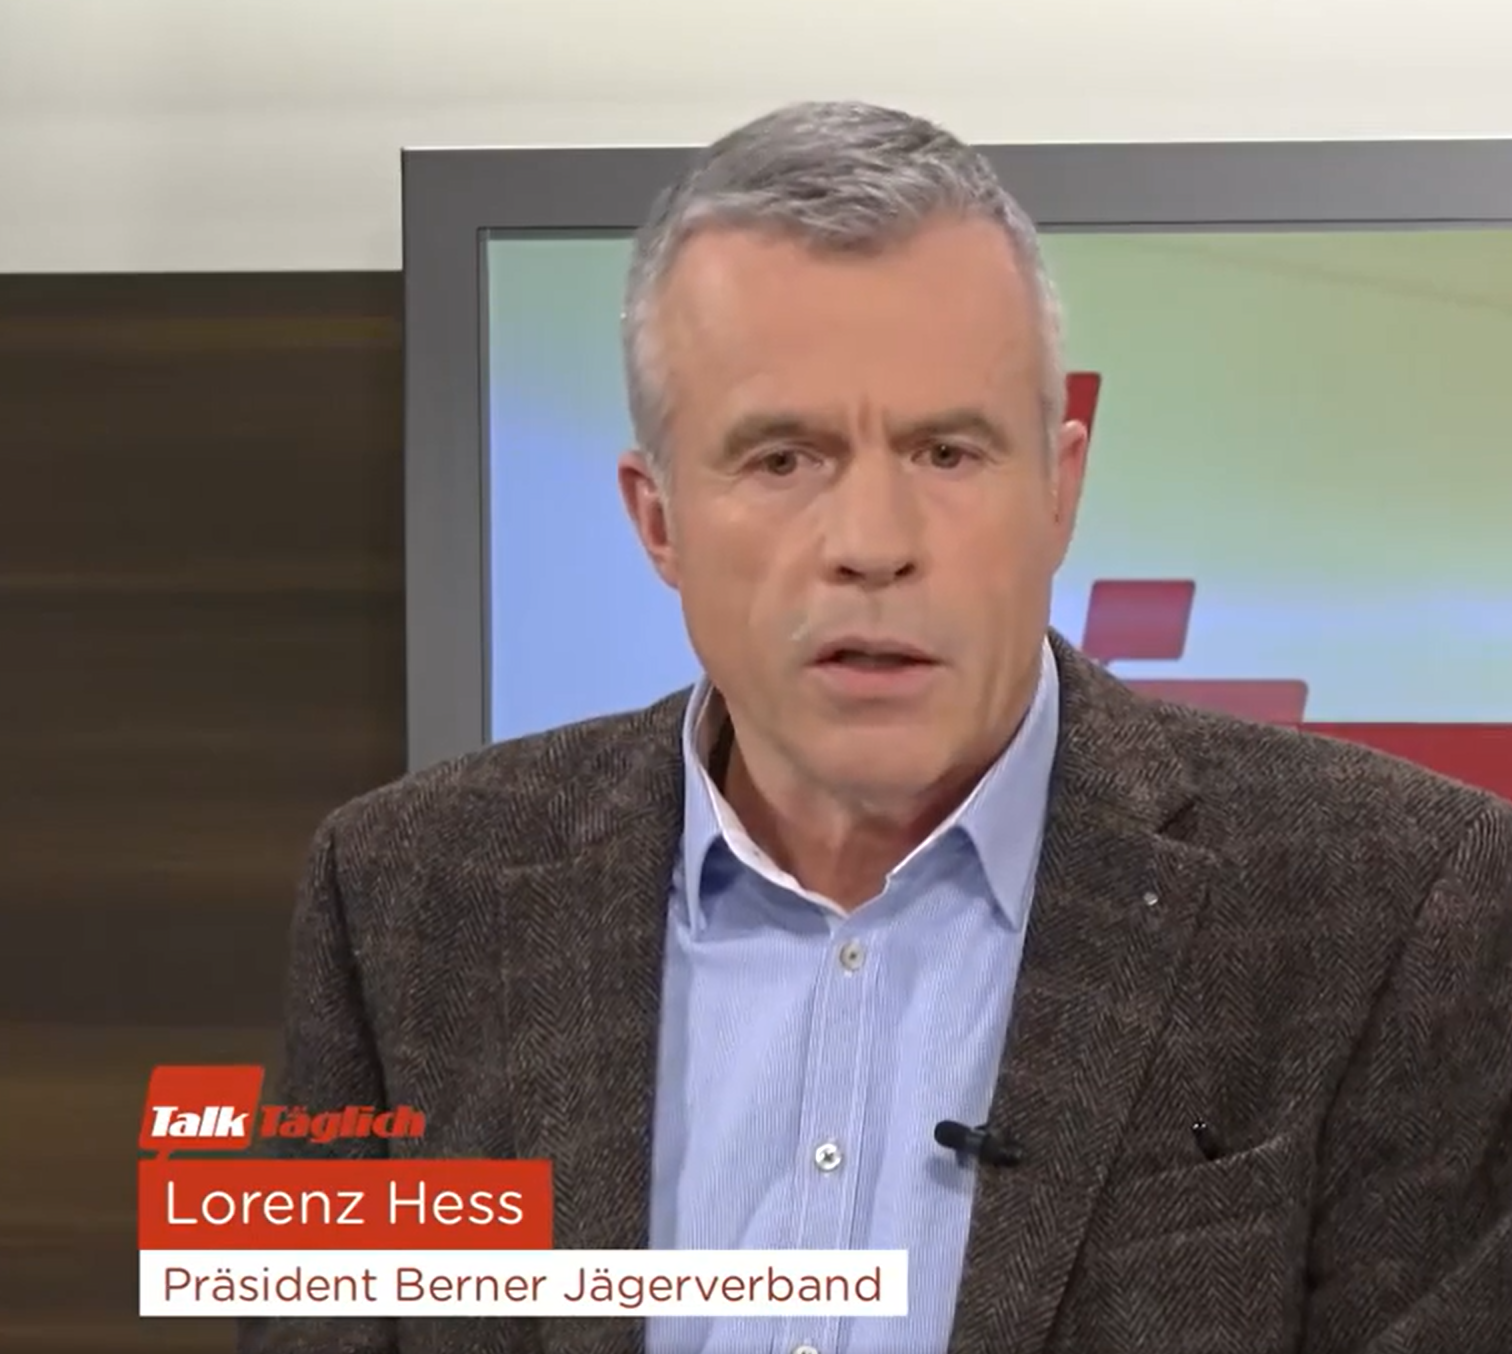 Lorenz Hess TalkTäglich